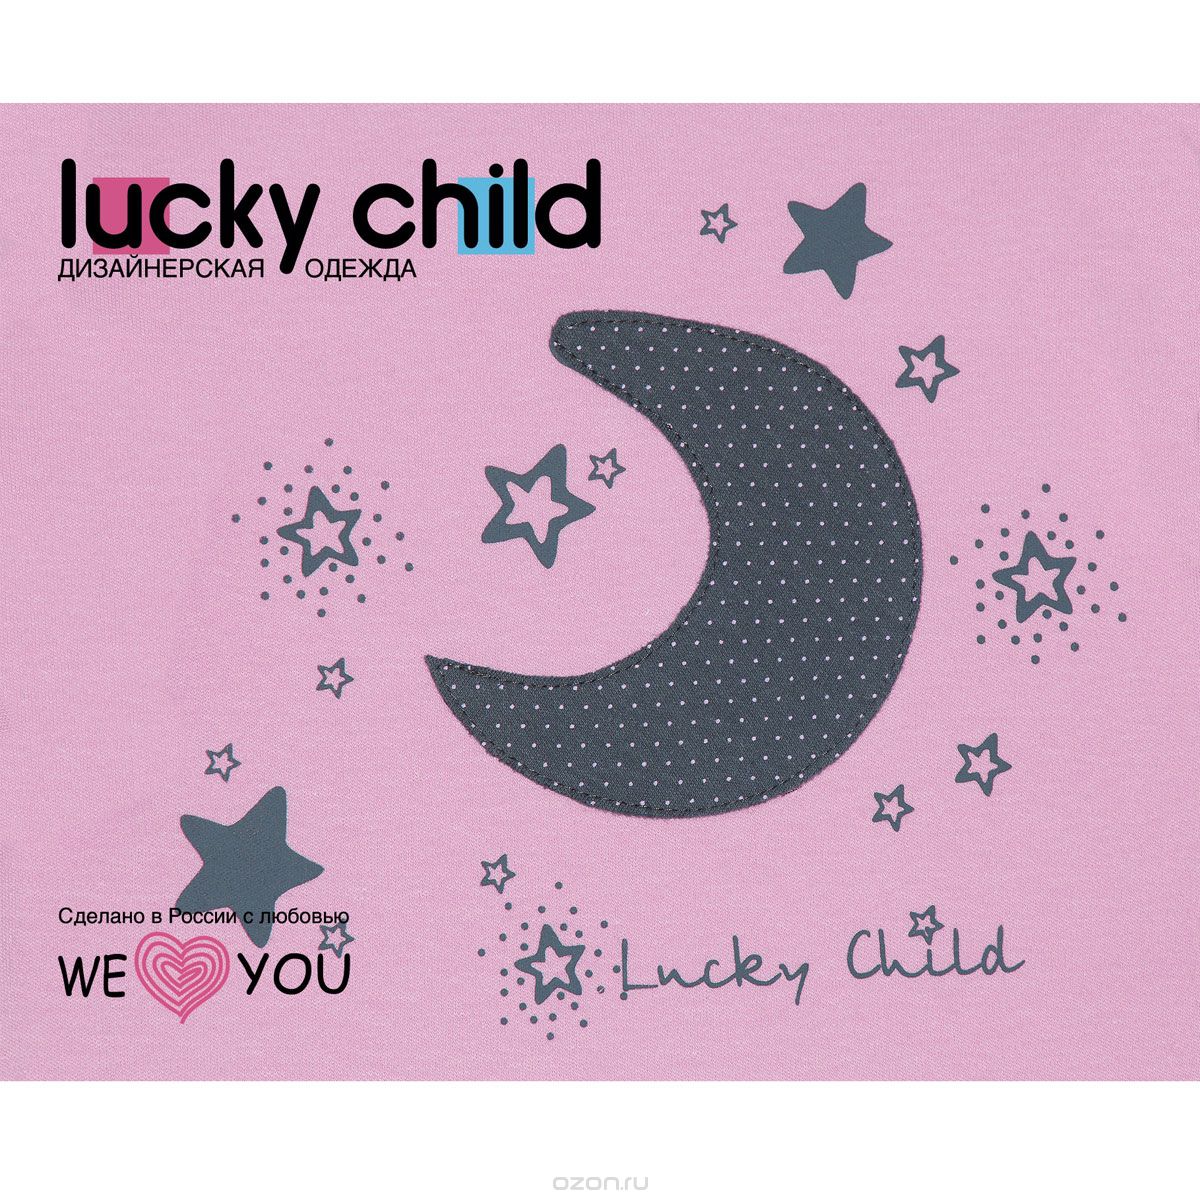    Lucky Child: , , : -, . 12-411.  104/110